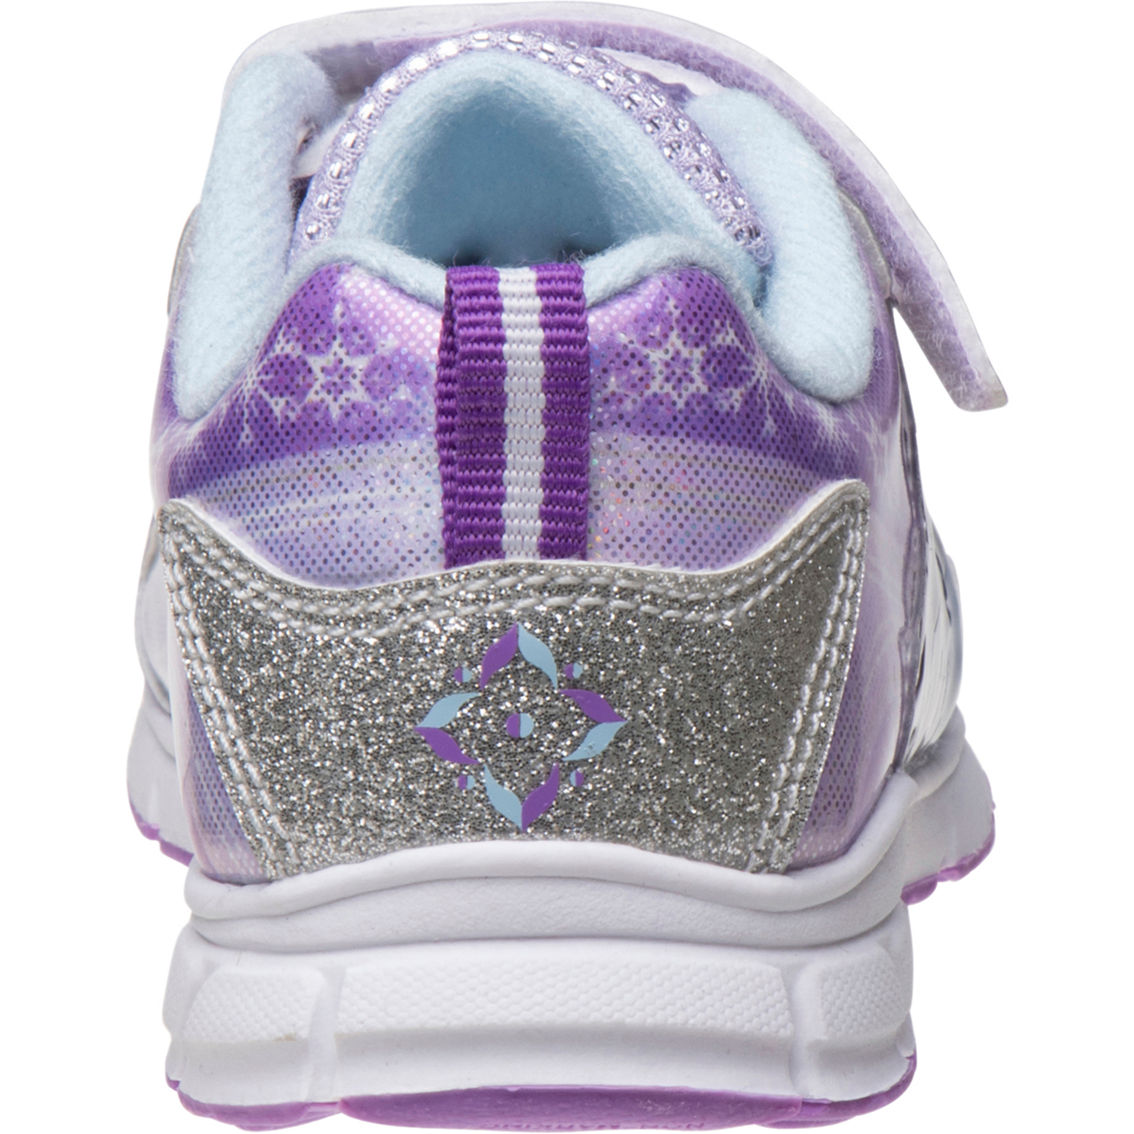 Disney Frozen Toddler Girls Sneakers - Image 3 of 5